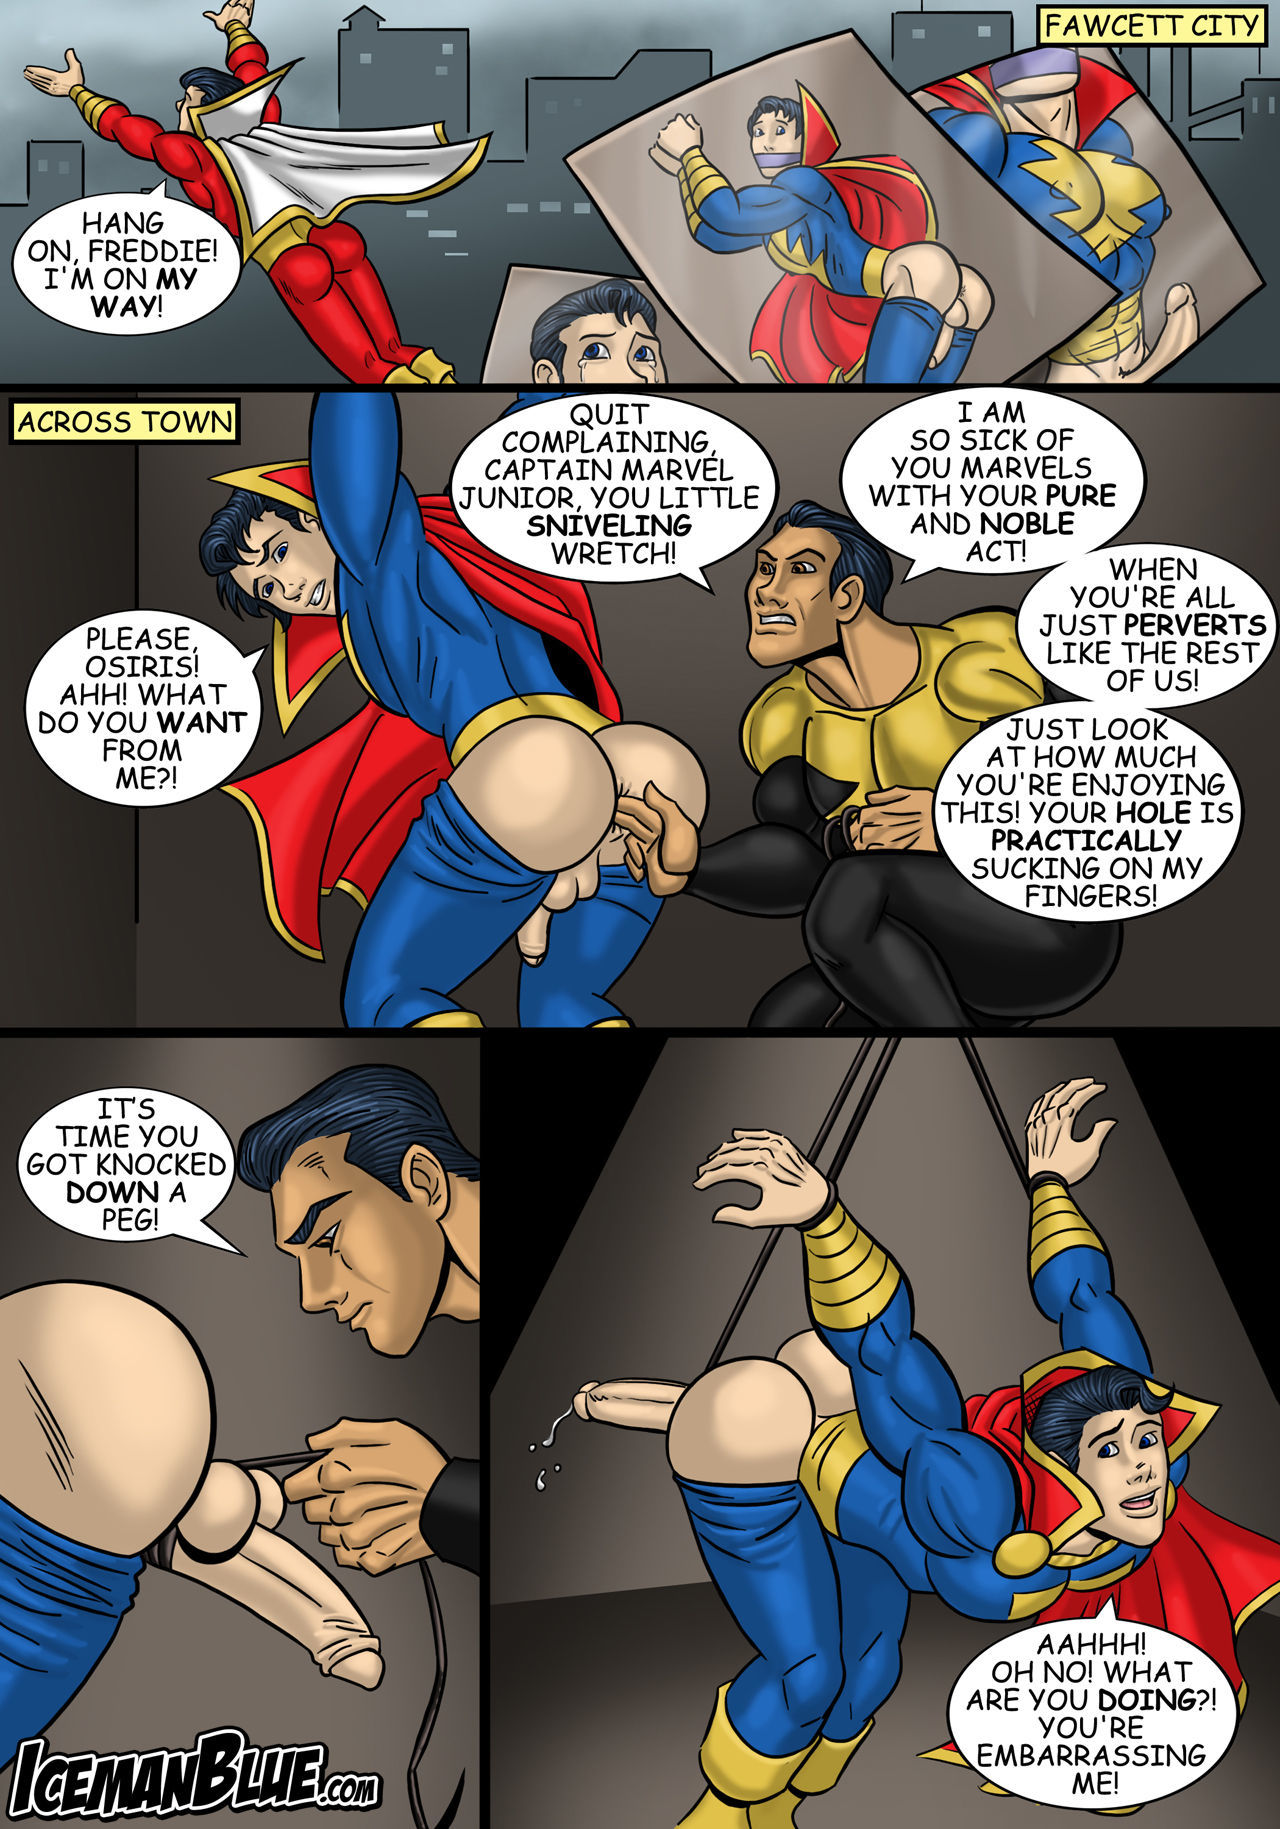 Captain Marvel Jr. (Iceman Blue) page 2